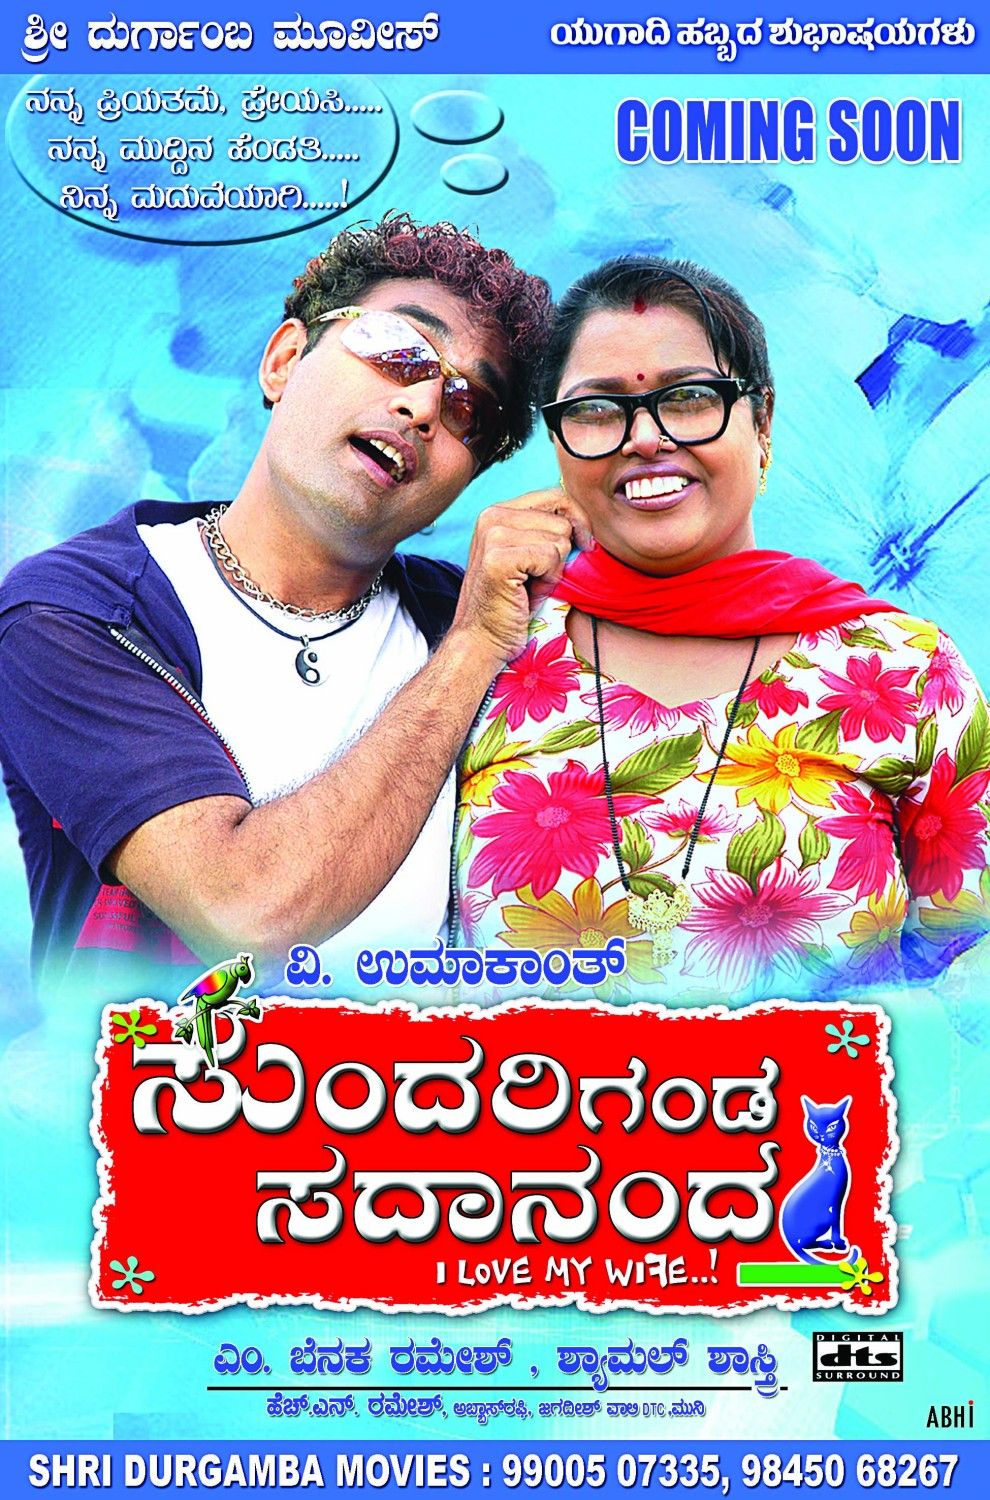 Extra Large Movie Poster Image for Sundari Ganda Sadananda (#2 of 5)